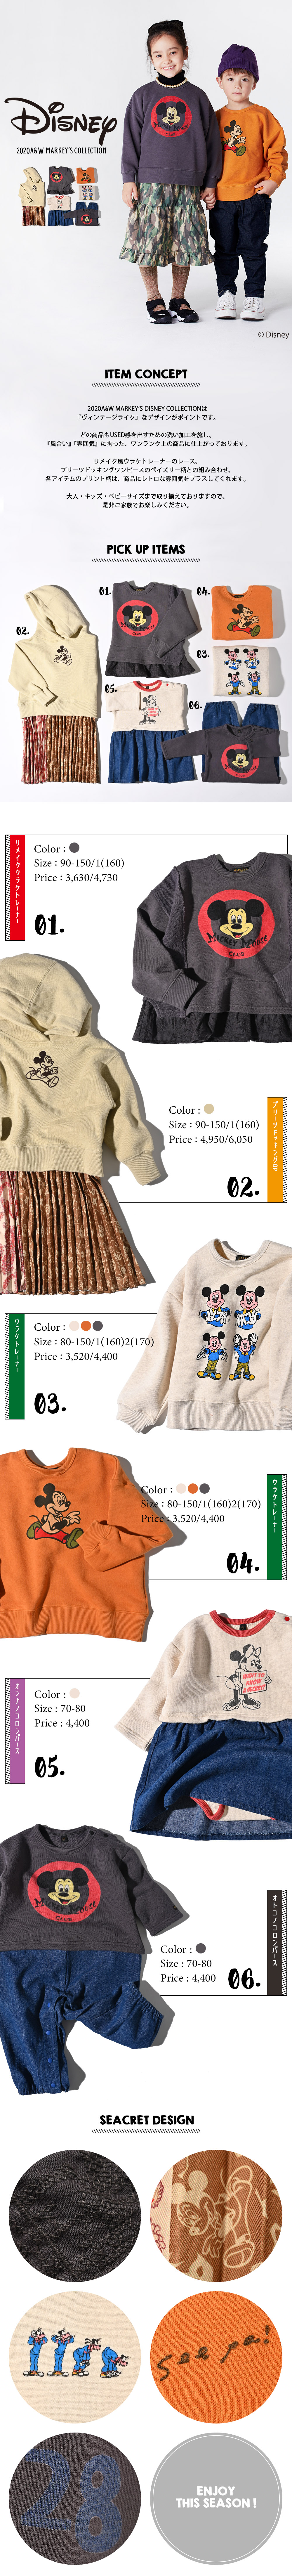 Disney a W Markey S Collection Feature 特集 子供服のセレクトショップ Markey S Online Store マーキーズ公式通販